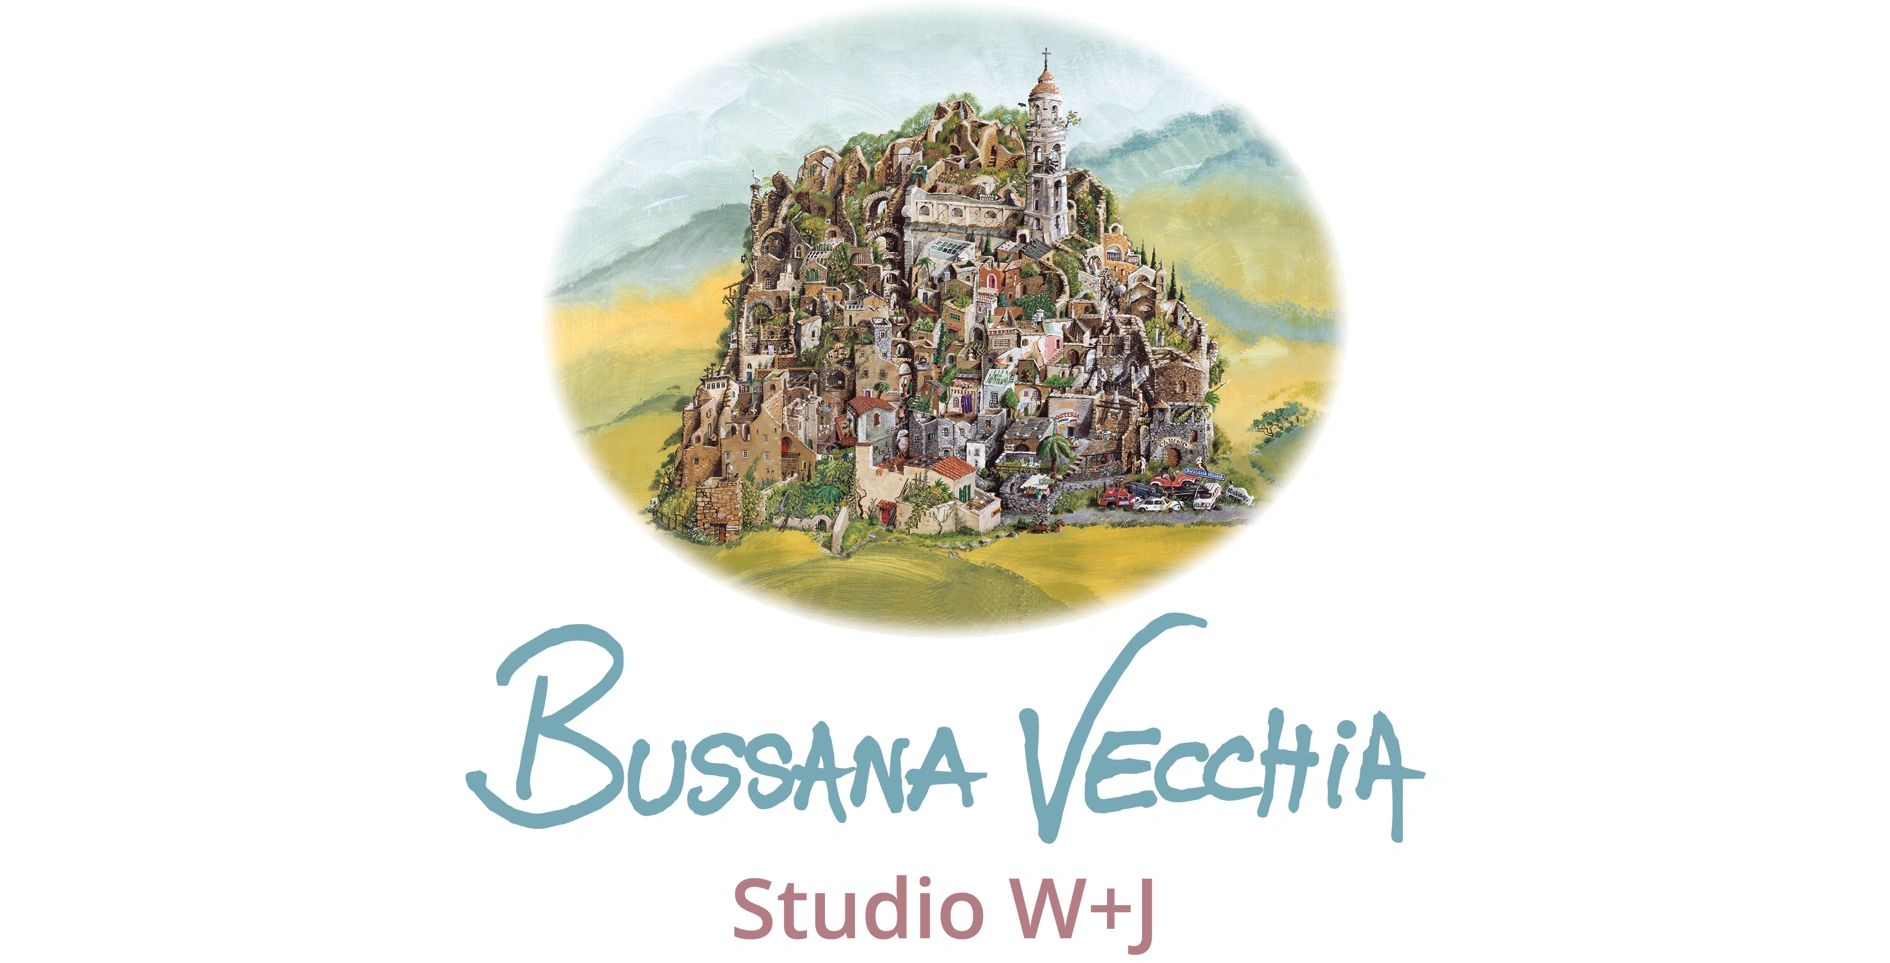 Bussana Vecchia - Studio W+J